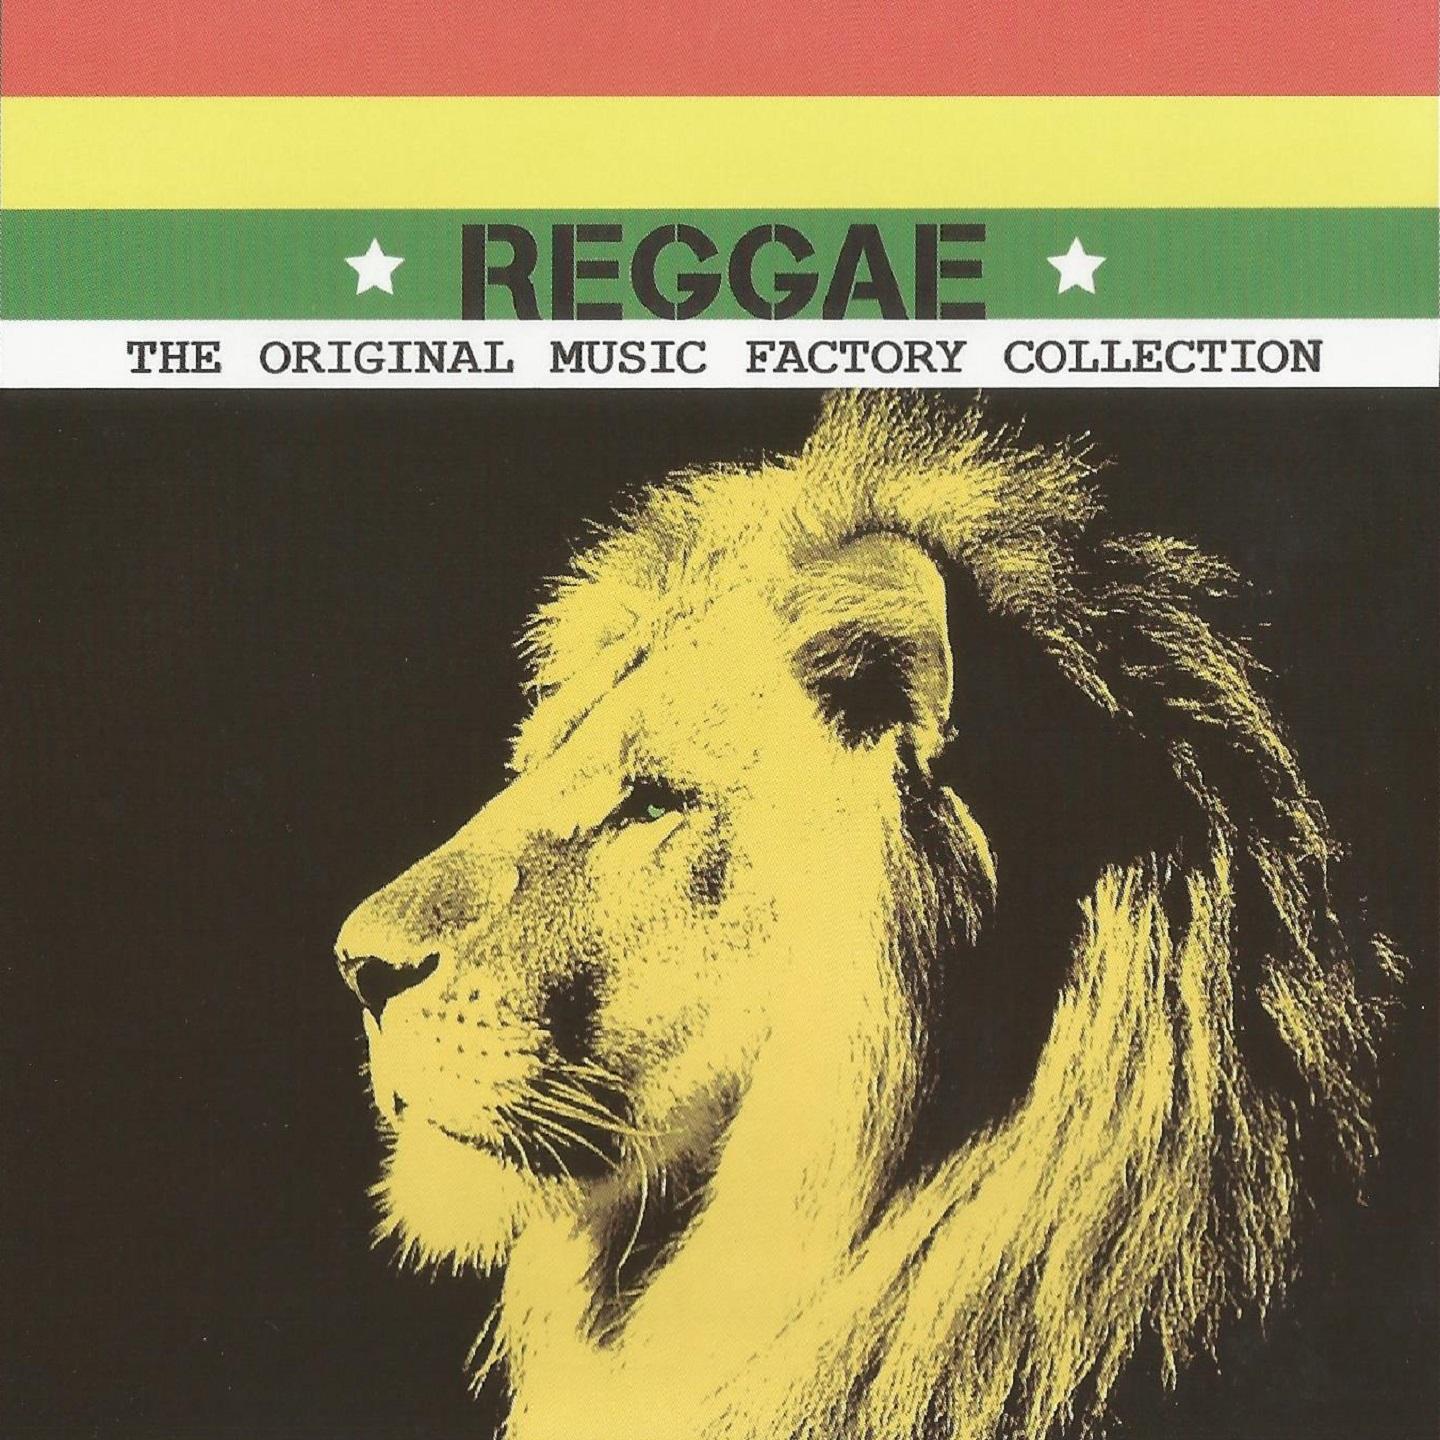 The Original Music Factory Collection, Reggae